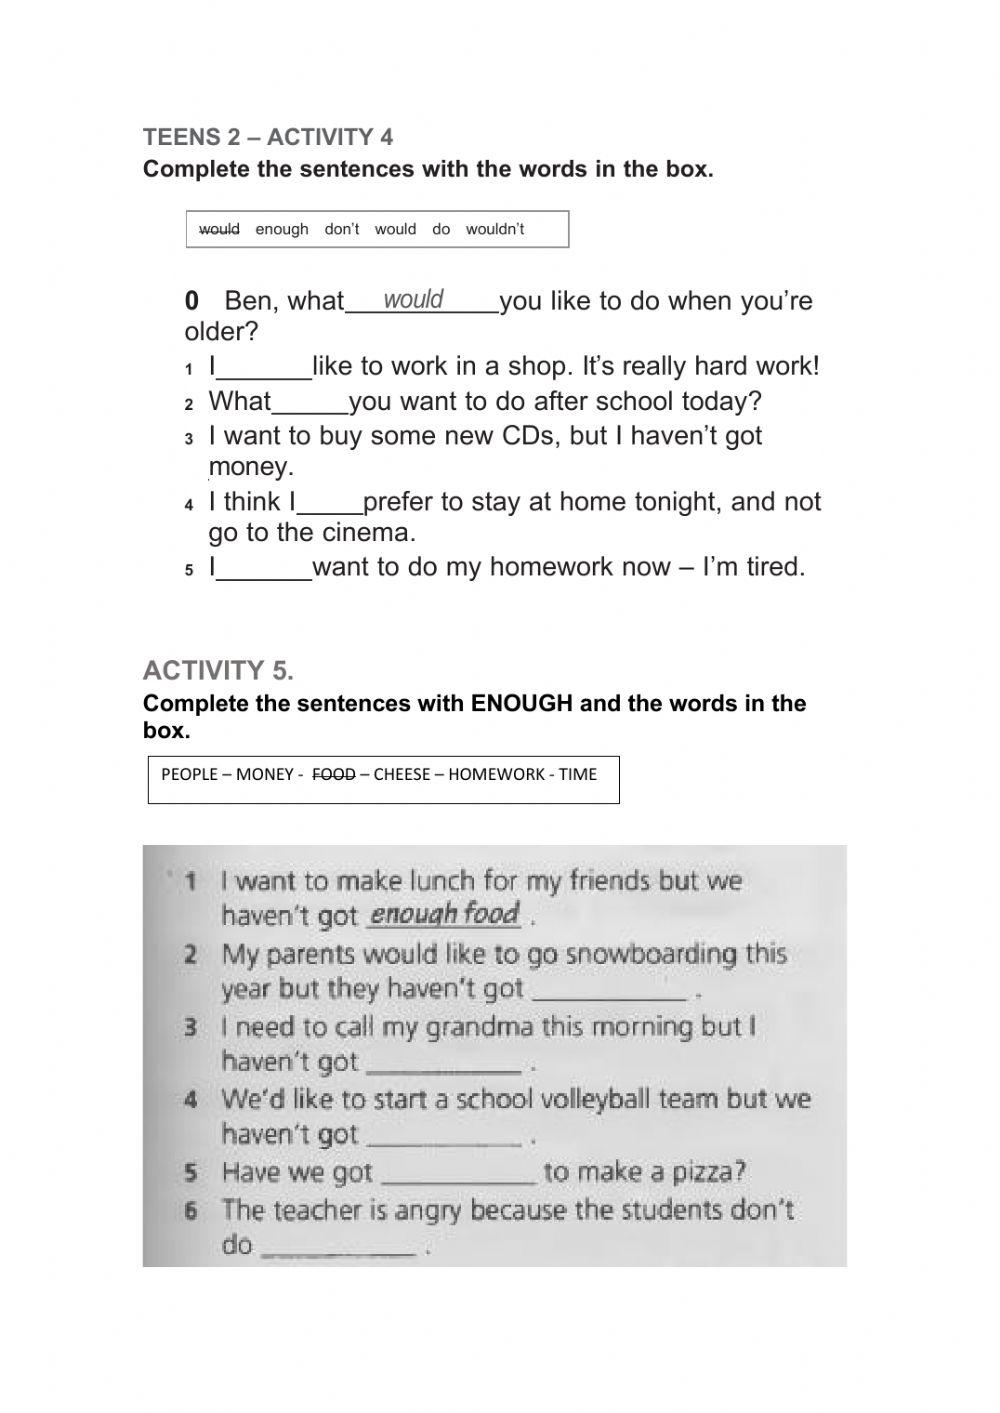 Teens 2 - activities 4 and 5